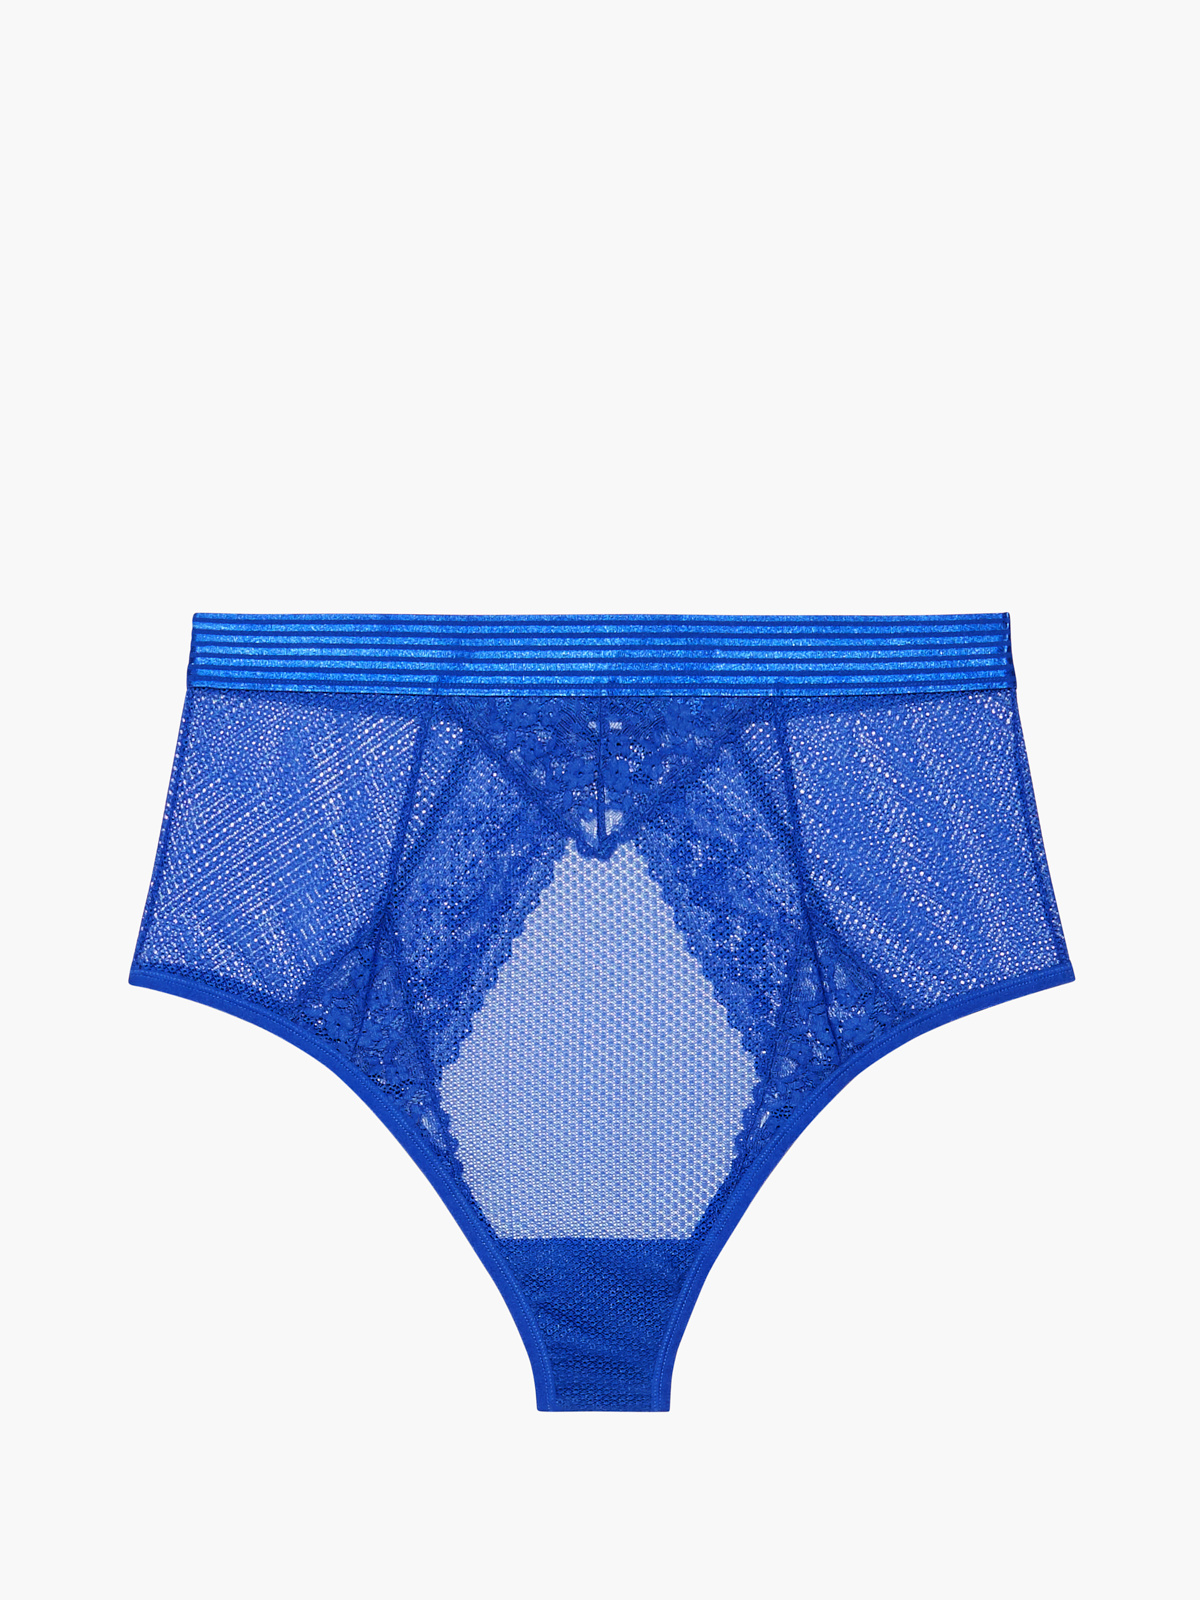 Skpblutn Womens Underwear Comfortable Lace Underpants Open Crotch Low Waist  Briefs Brief Panties Lace Blue